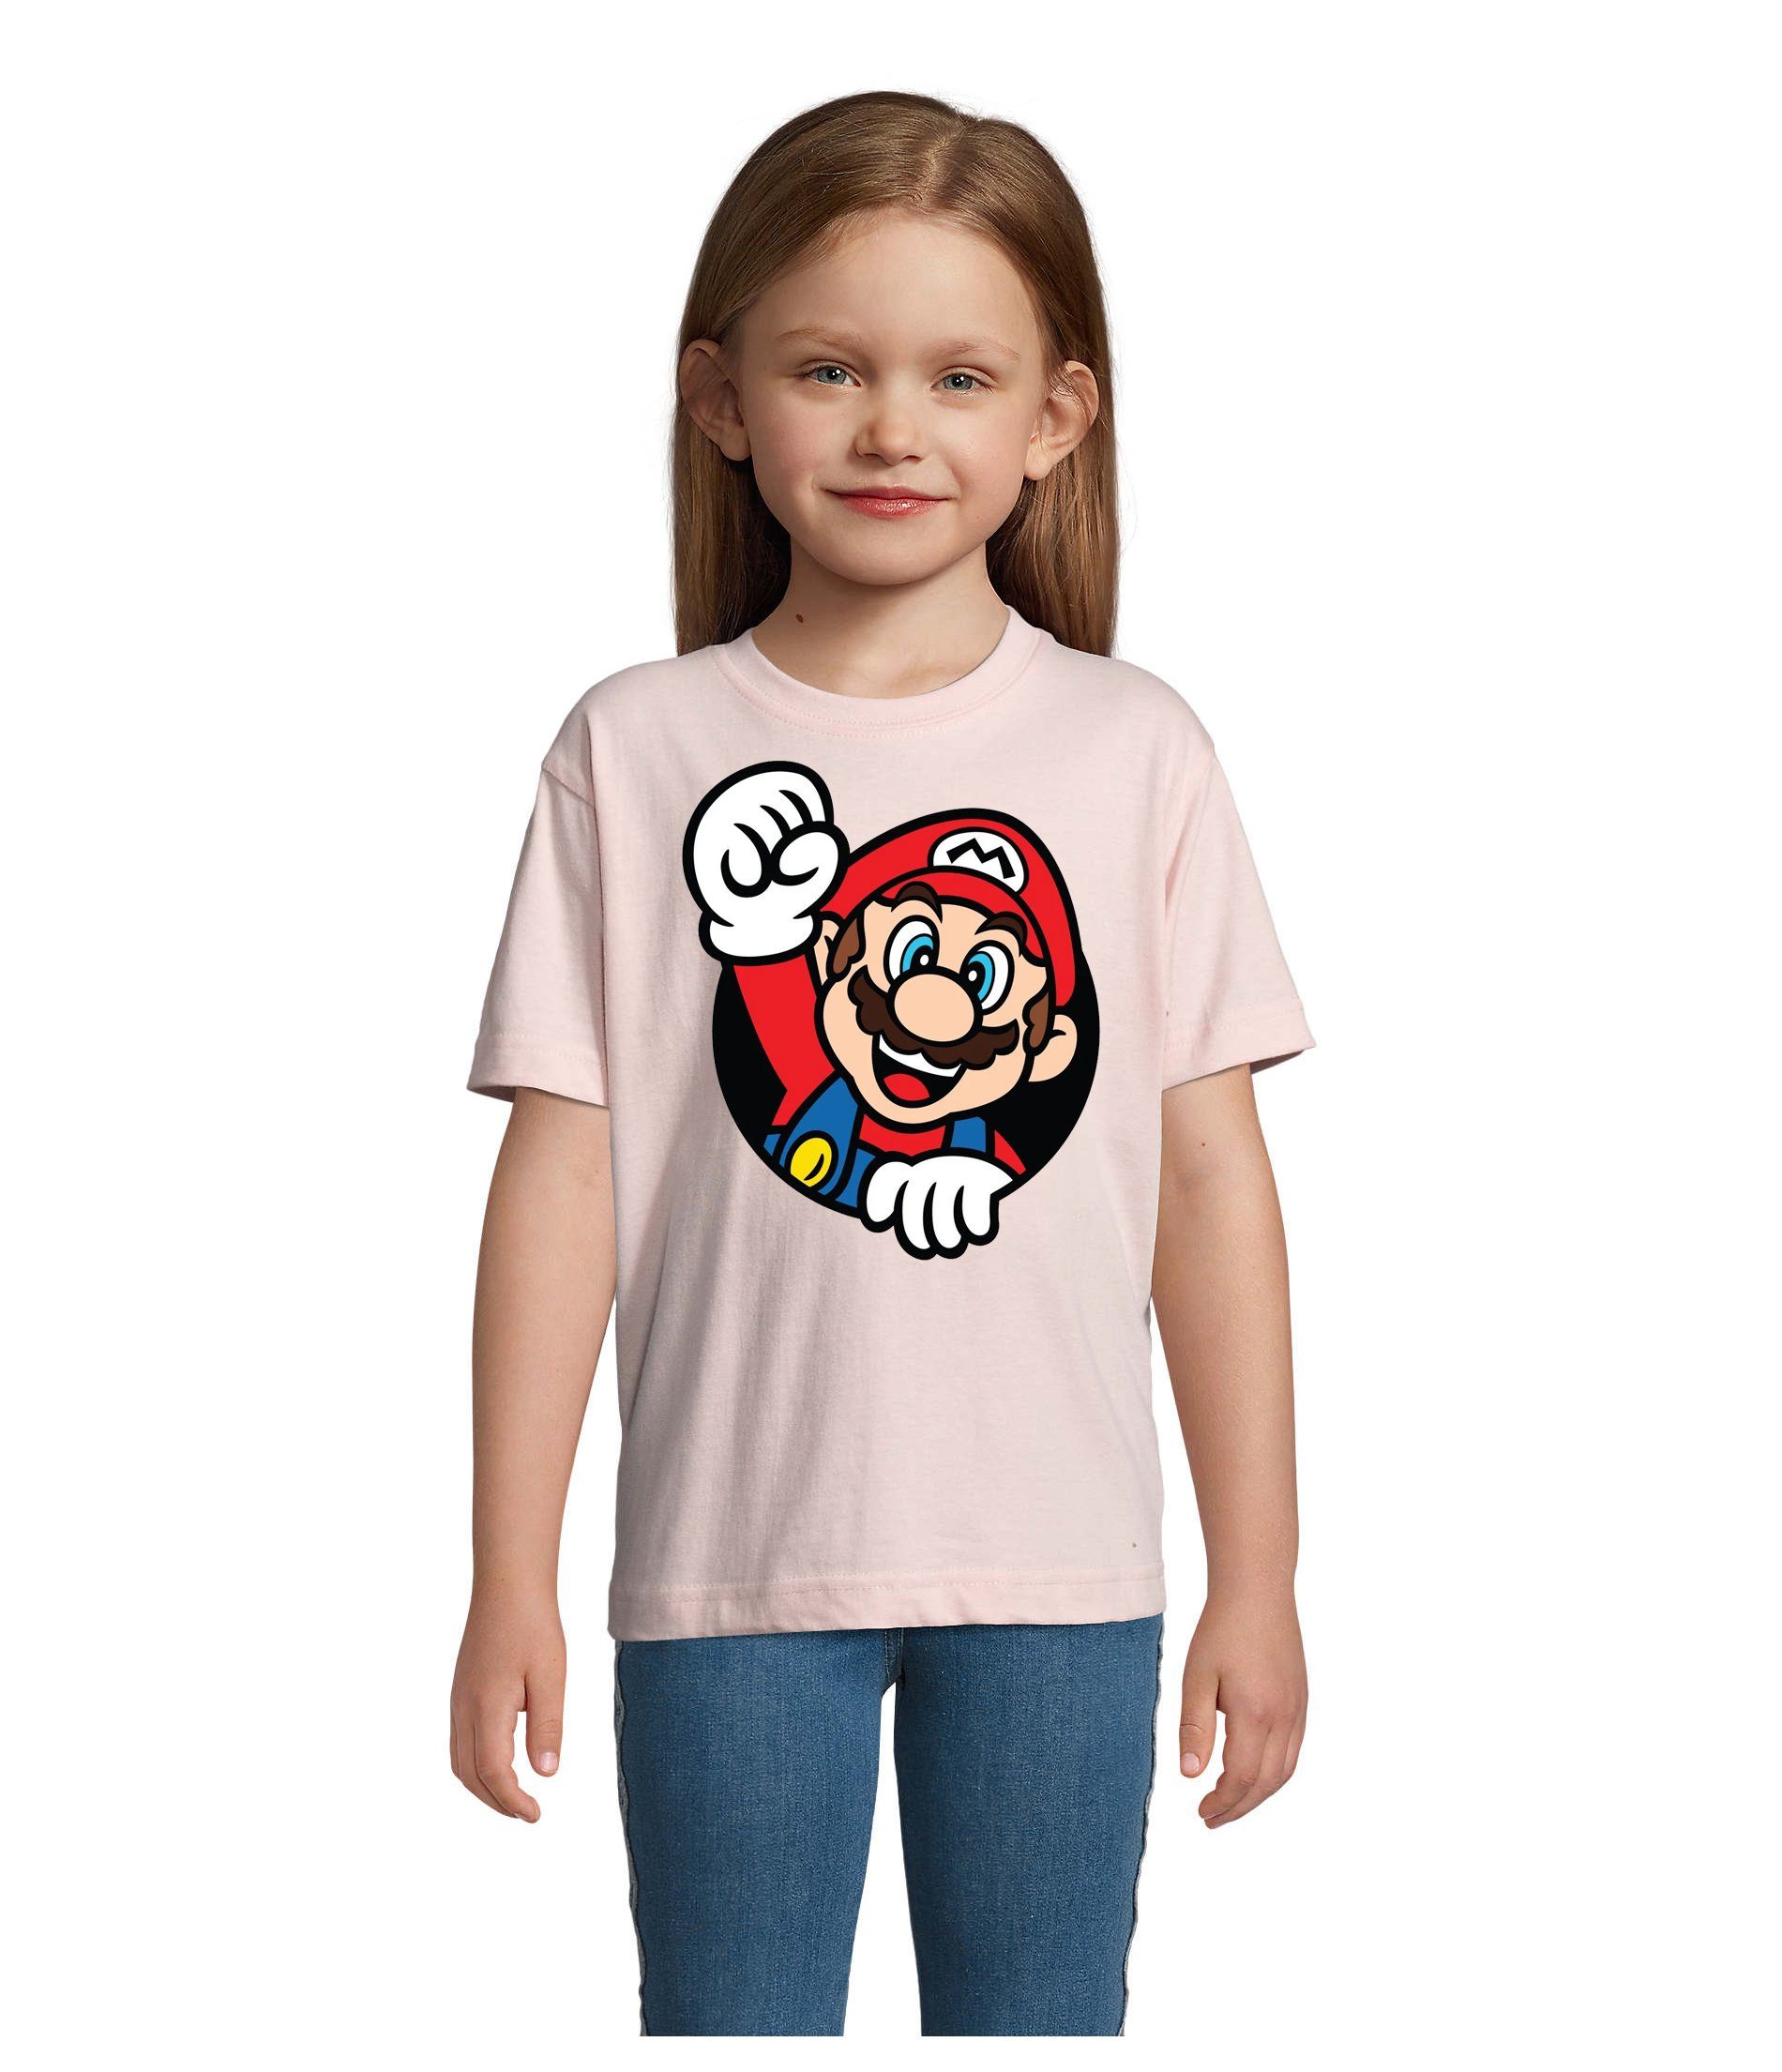 Blondie & Brownie T-Shirt Kinder Gaming Spiel Nintendo Super Faust Mario Rosa Nerd Konsole Konsole